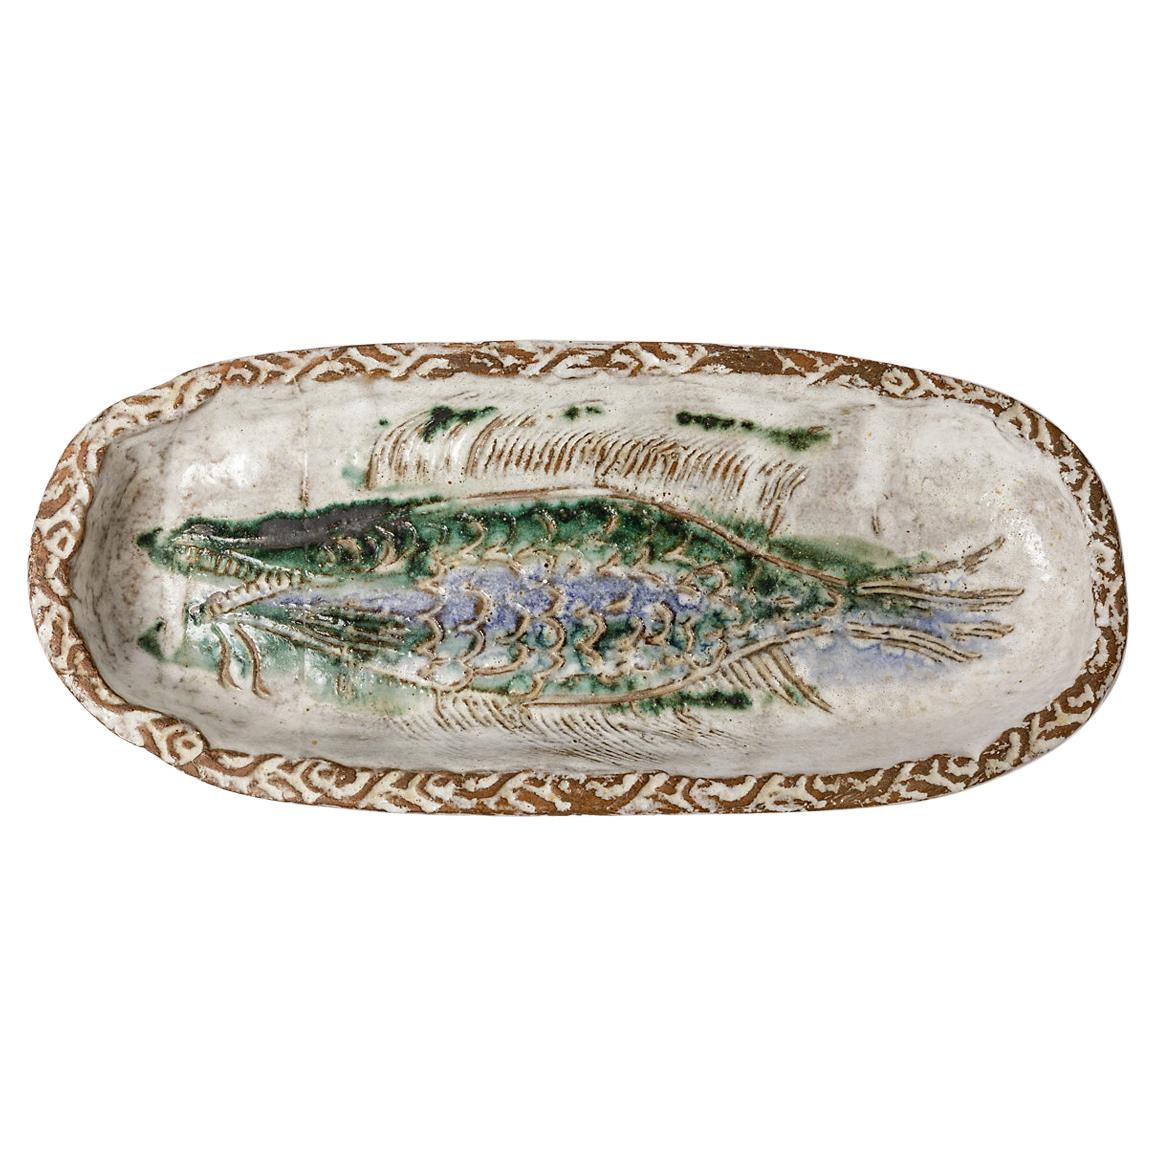 Albert Thiry Animal Stoneware Ceramic Dish Plate with Fish Decoration Design